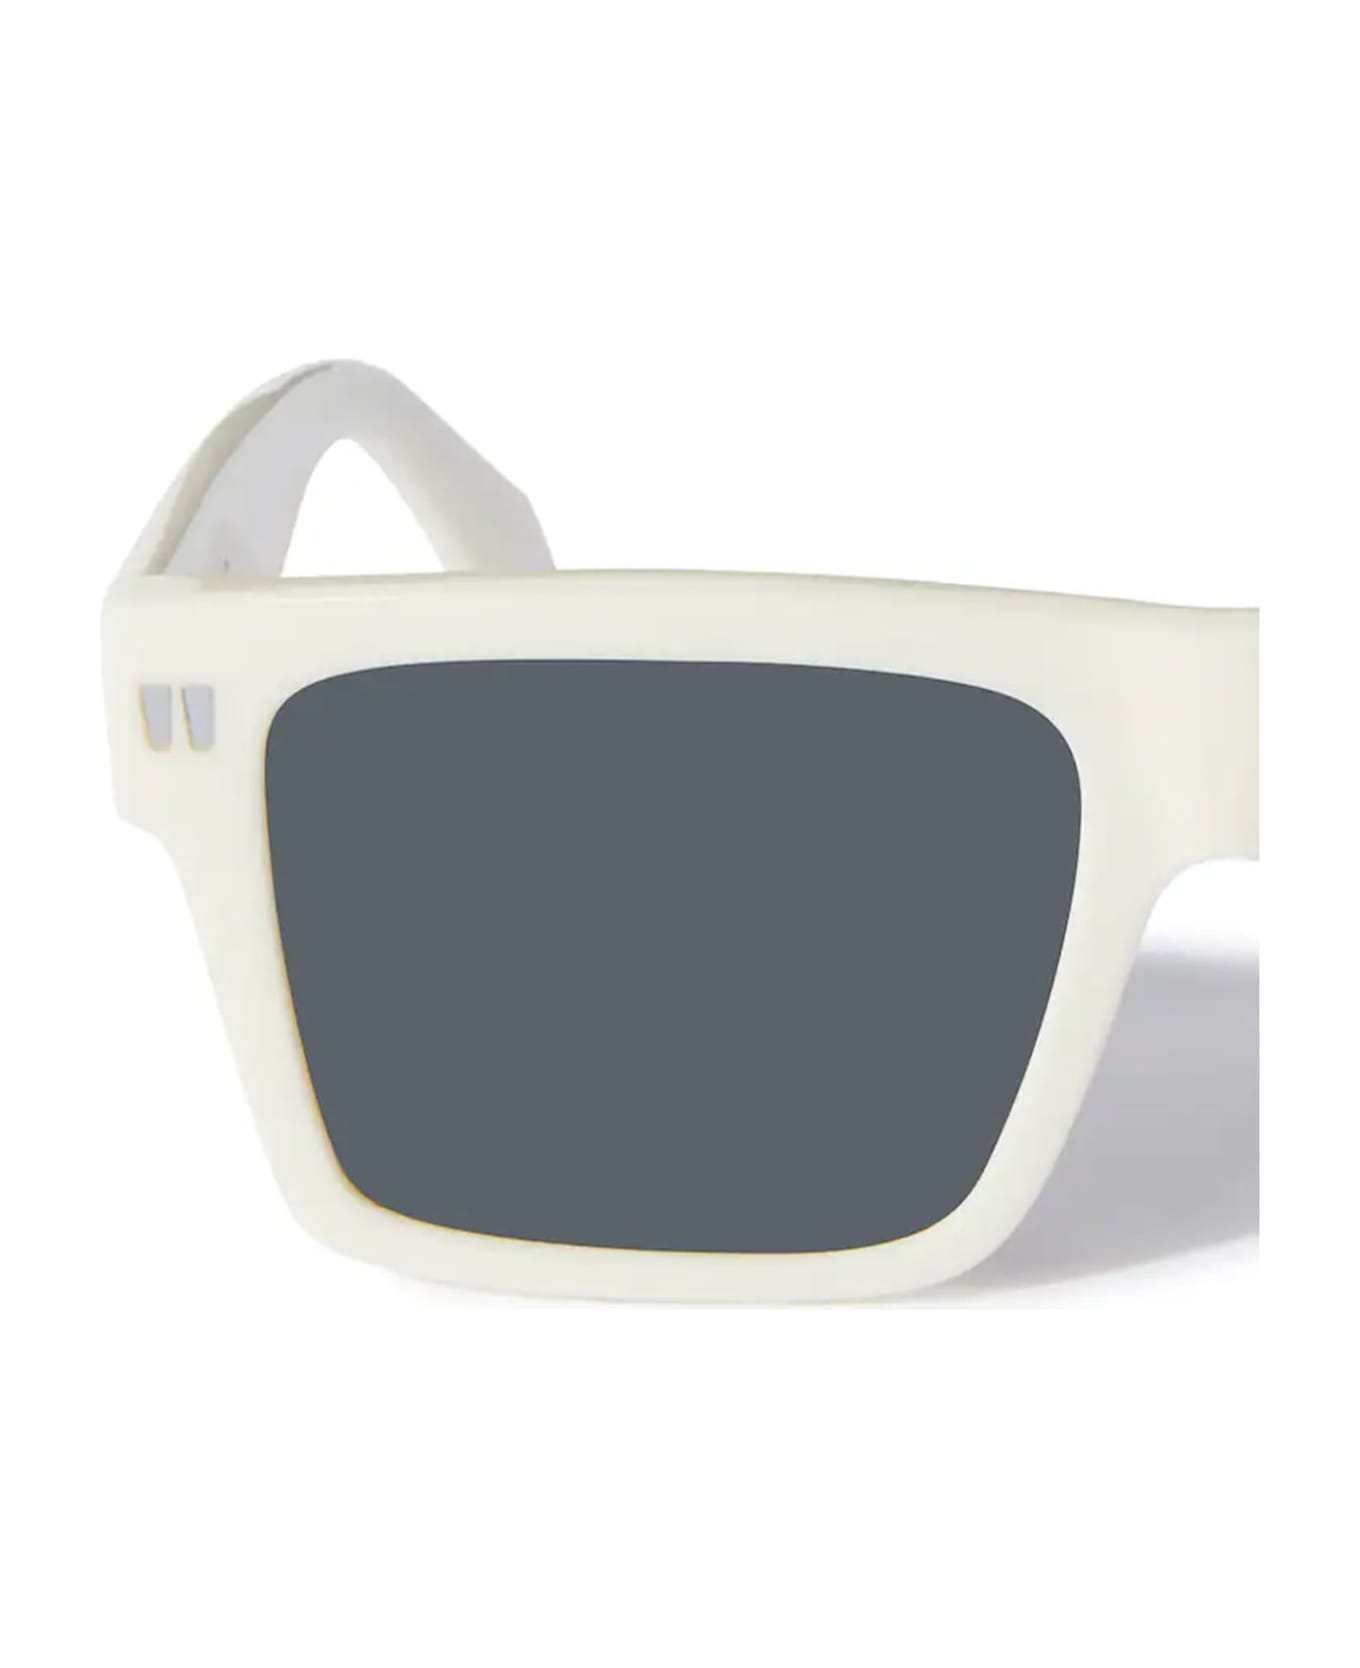 Off-White Lawton Sunglasses - White サングラス